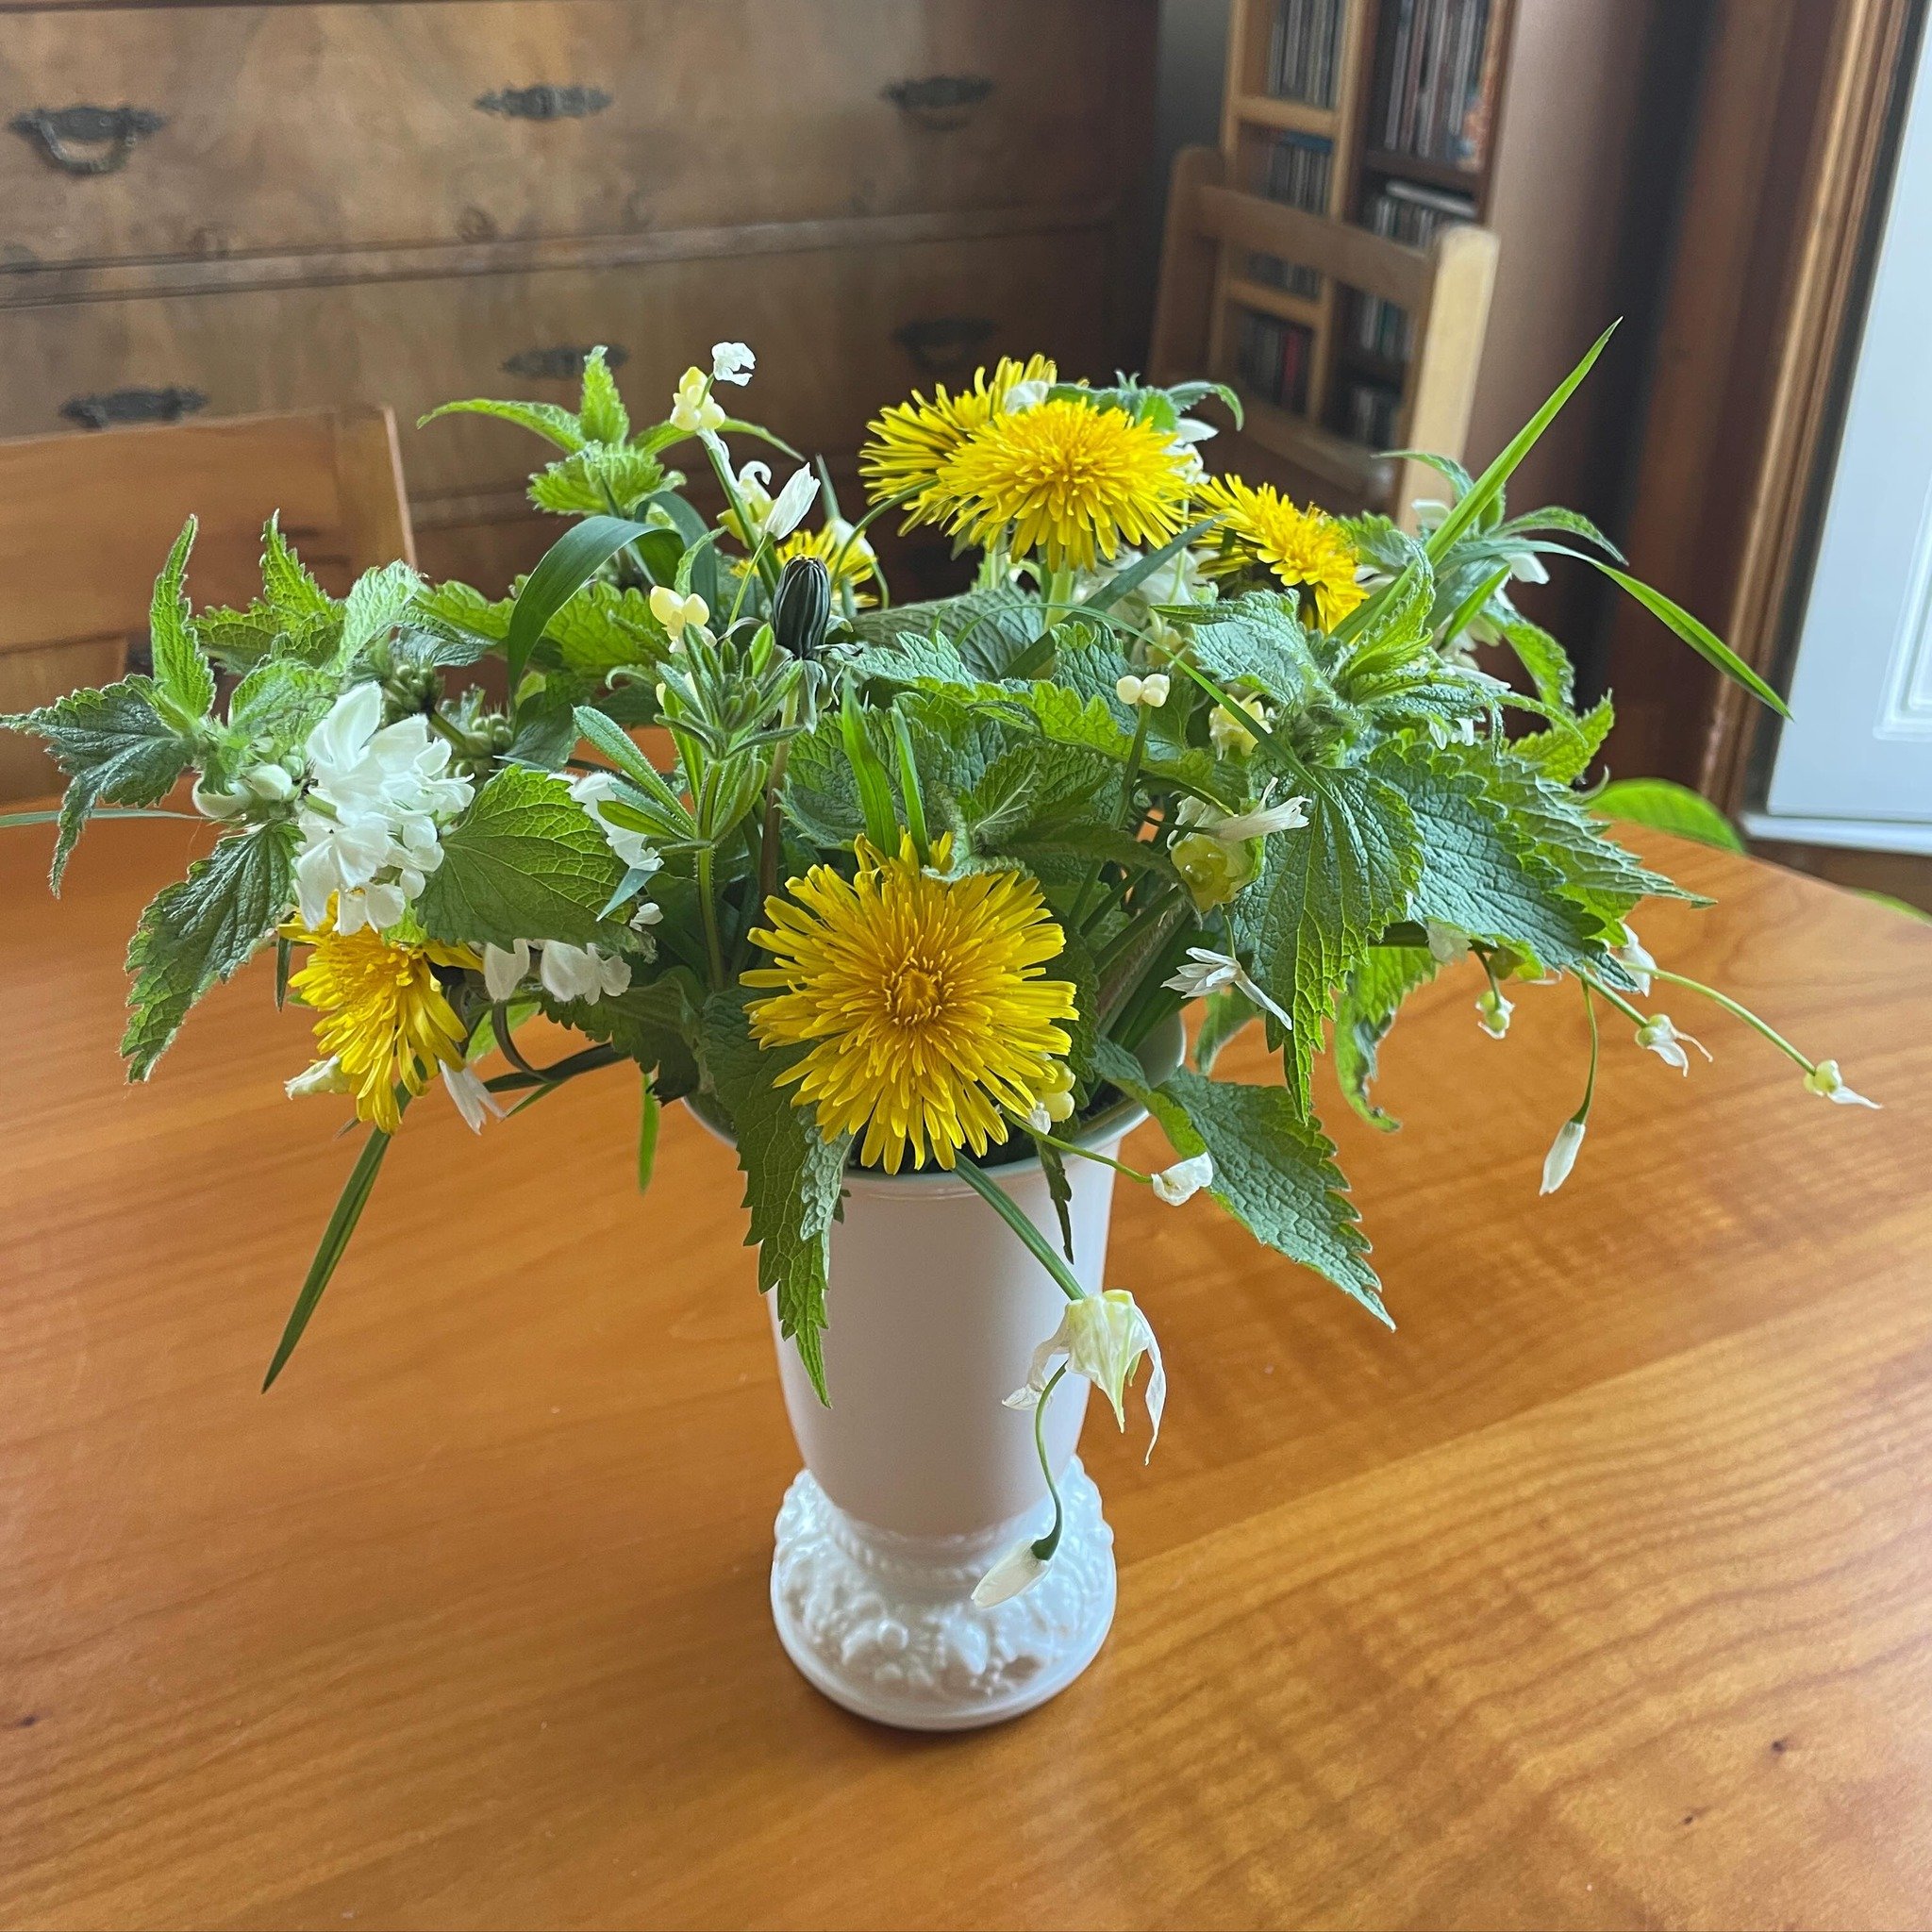 Spring weed bouquet #springflowers #weedfloristry #flowerpower #dandelion #wildgarlic #deadnettle #couchgrass